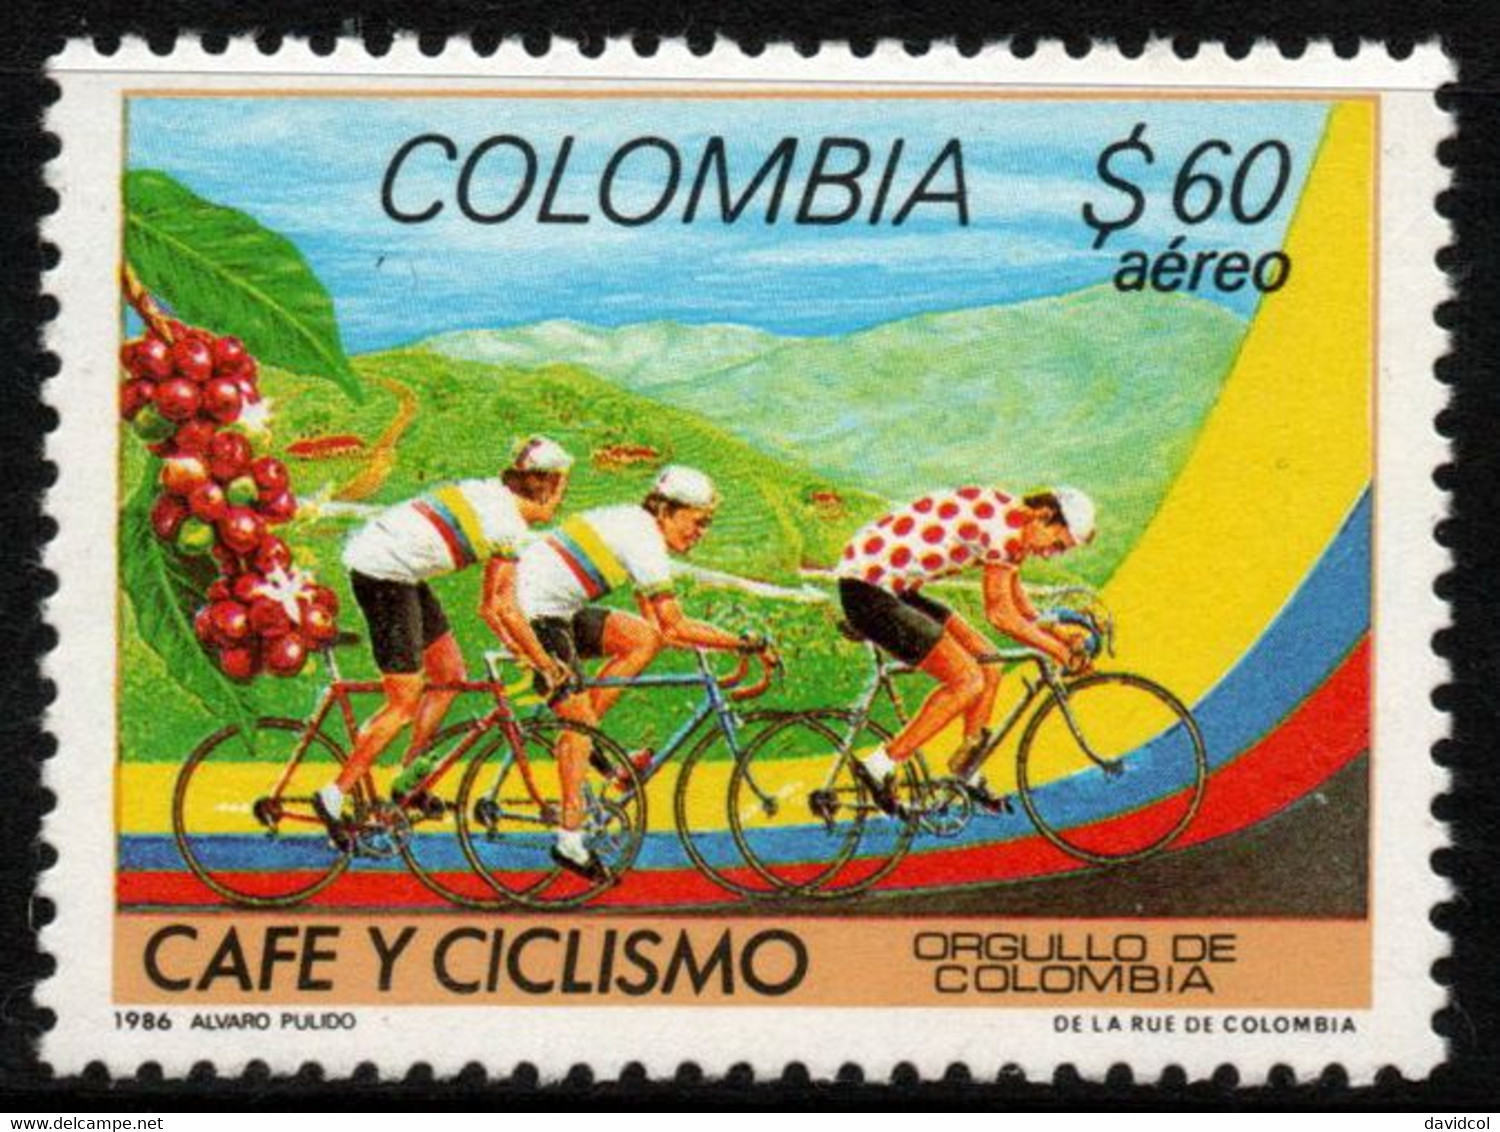 01- KOLUMBIEN - 1986 - MI#:1664 -MNH- COFFEE AND CICLISM - Colombia